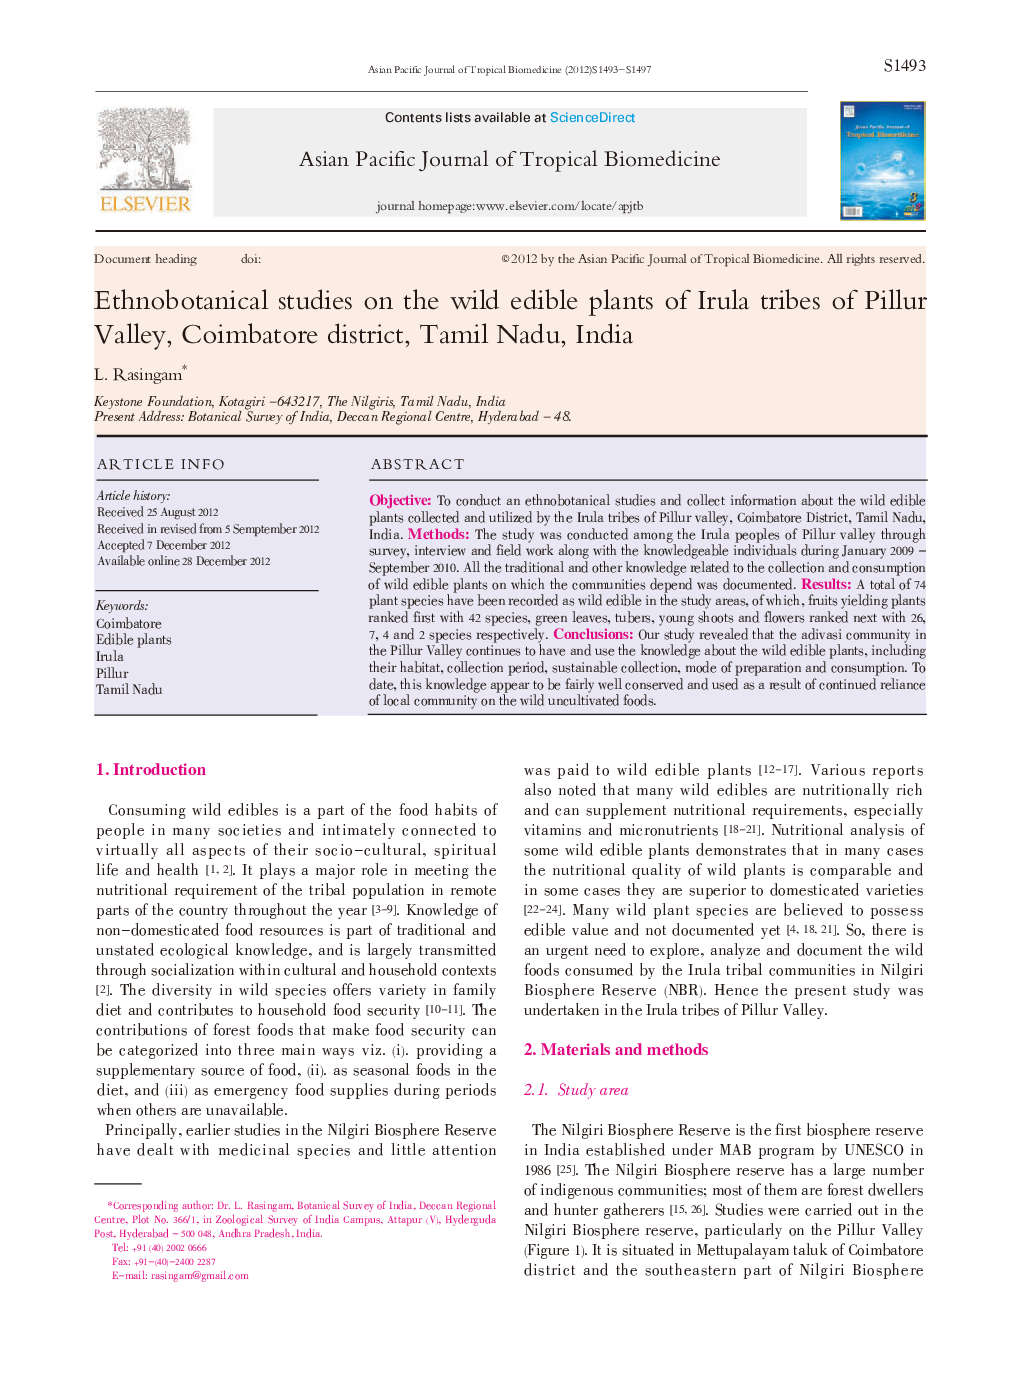 Ethnobotanical studies on the wild edible plants of Irula tribes of Pillur Valley, Coimbatore district, Tamil Nadu, India